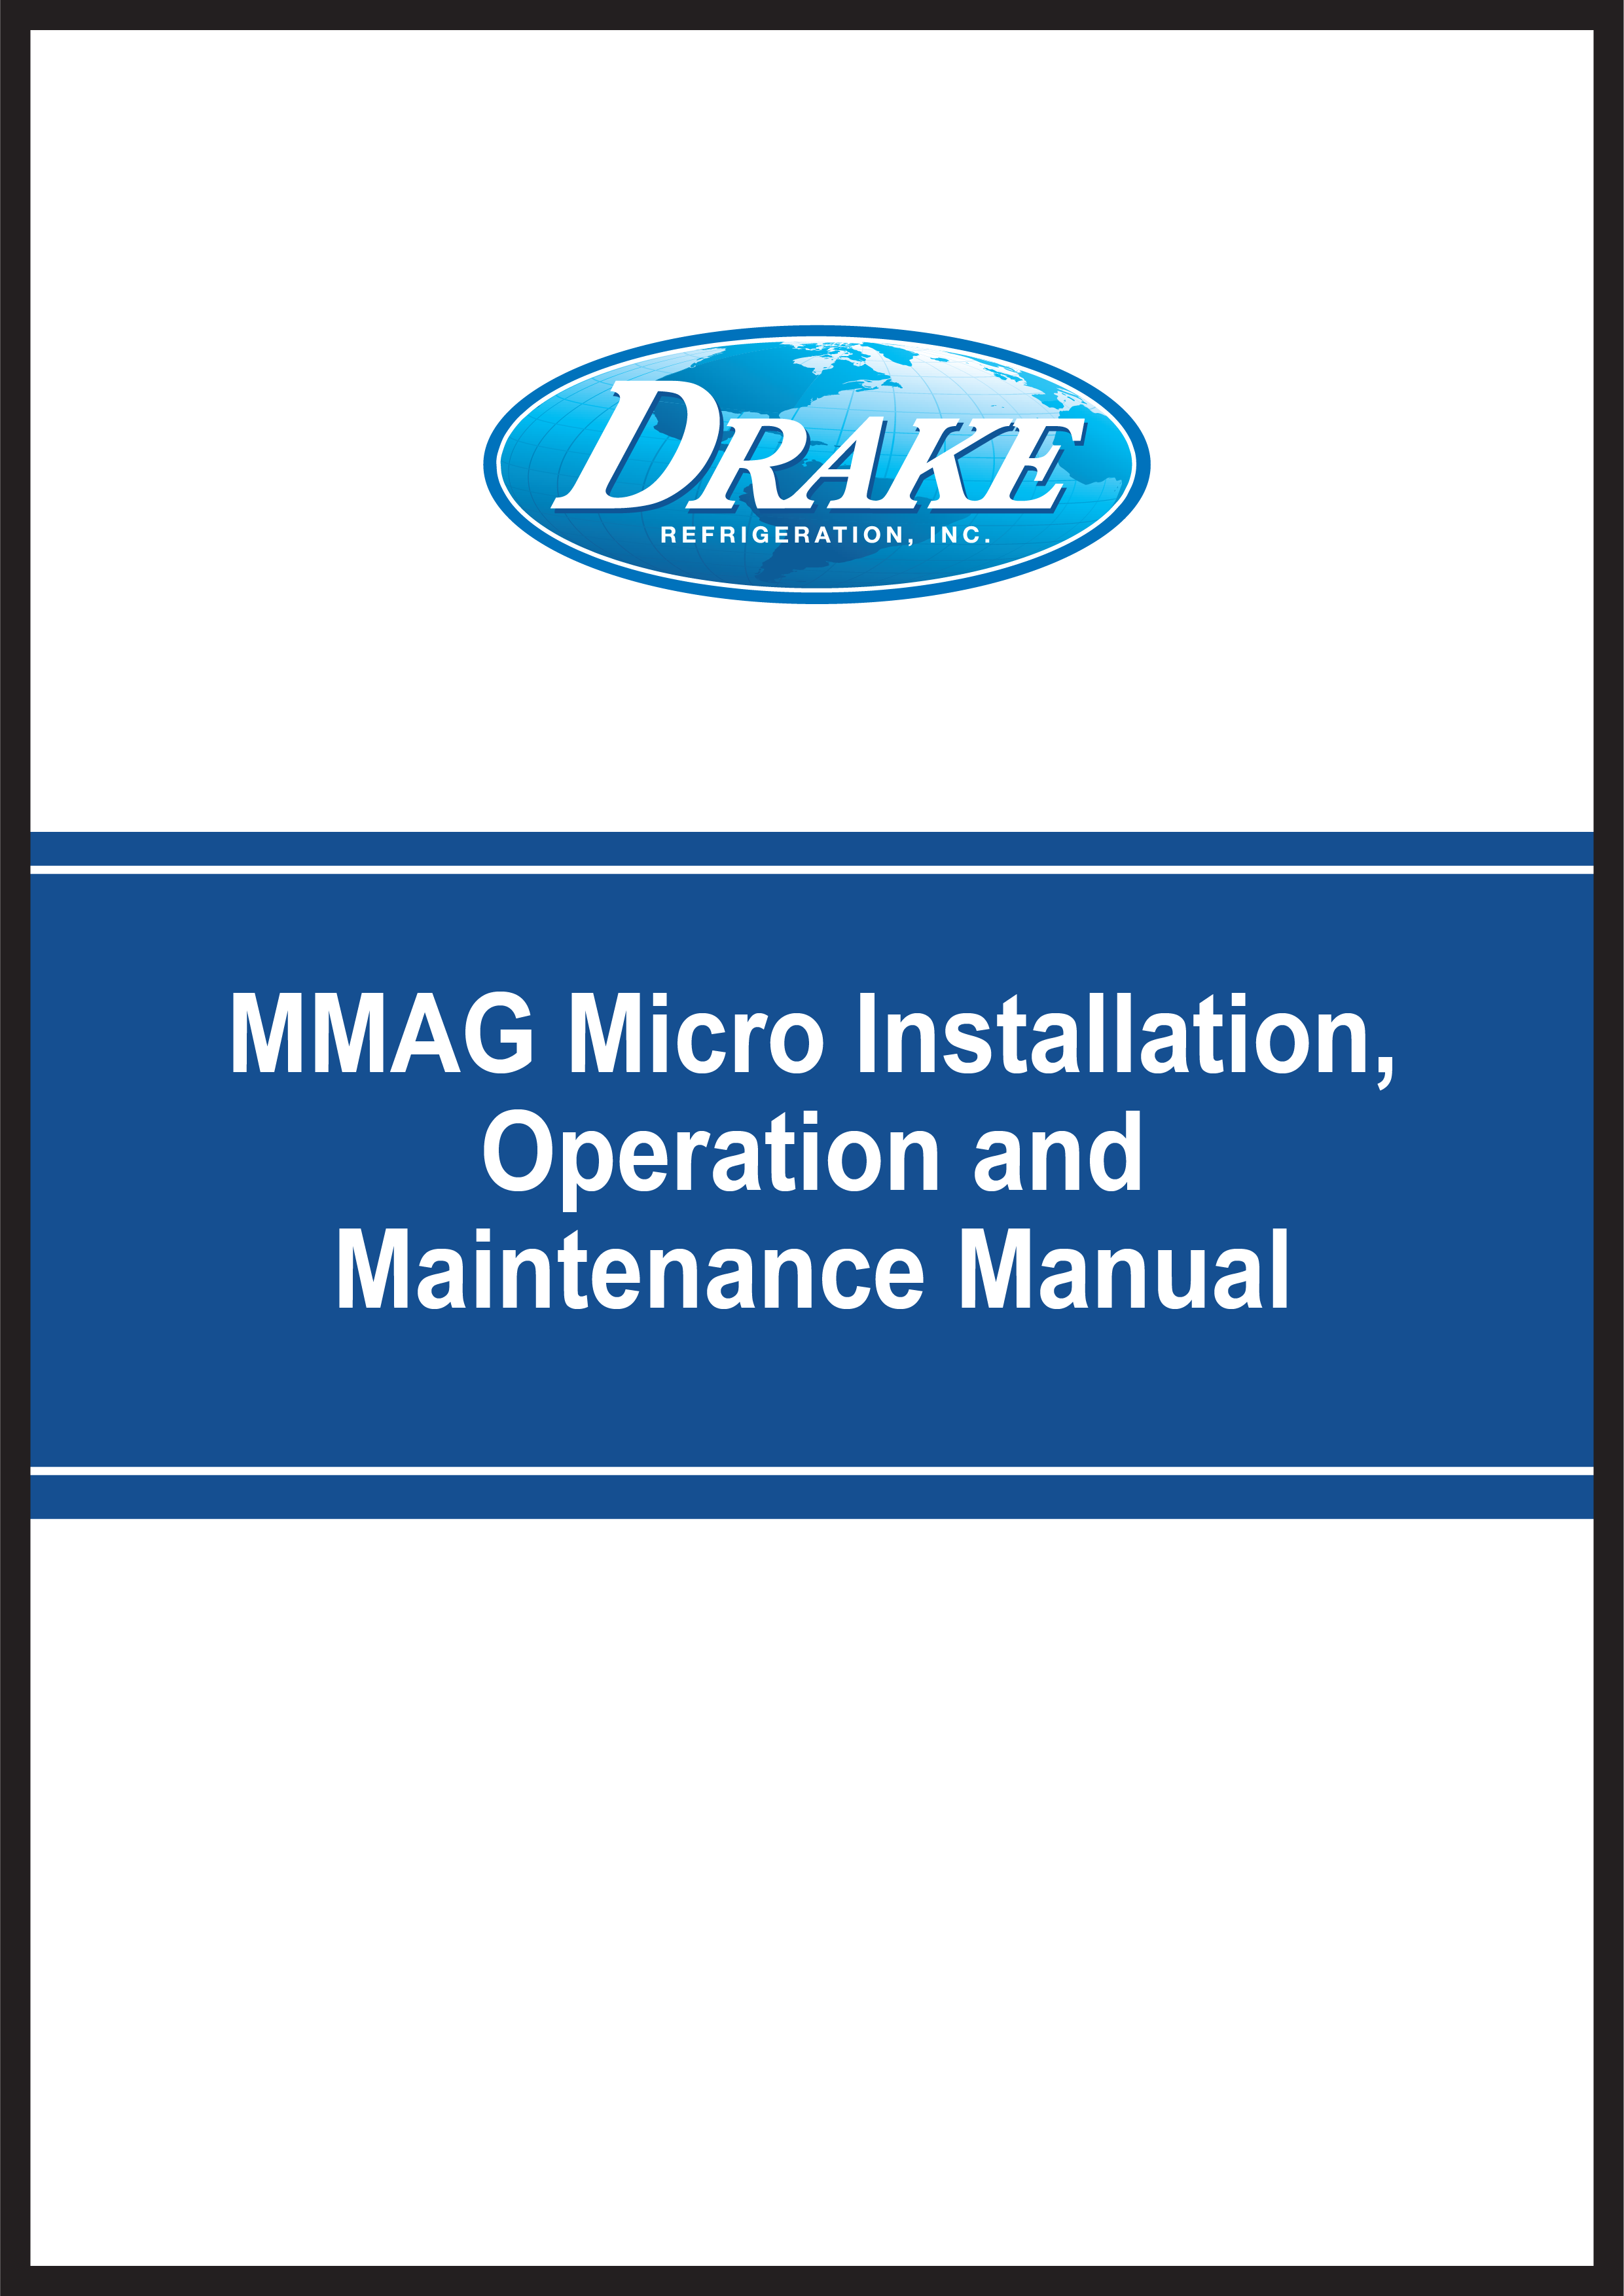 Web Template MMAG Micro IOM Manual.png